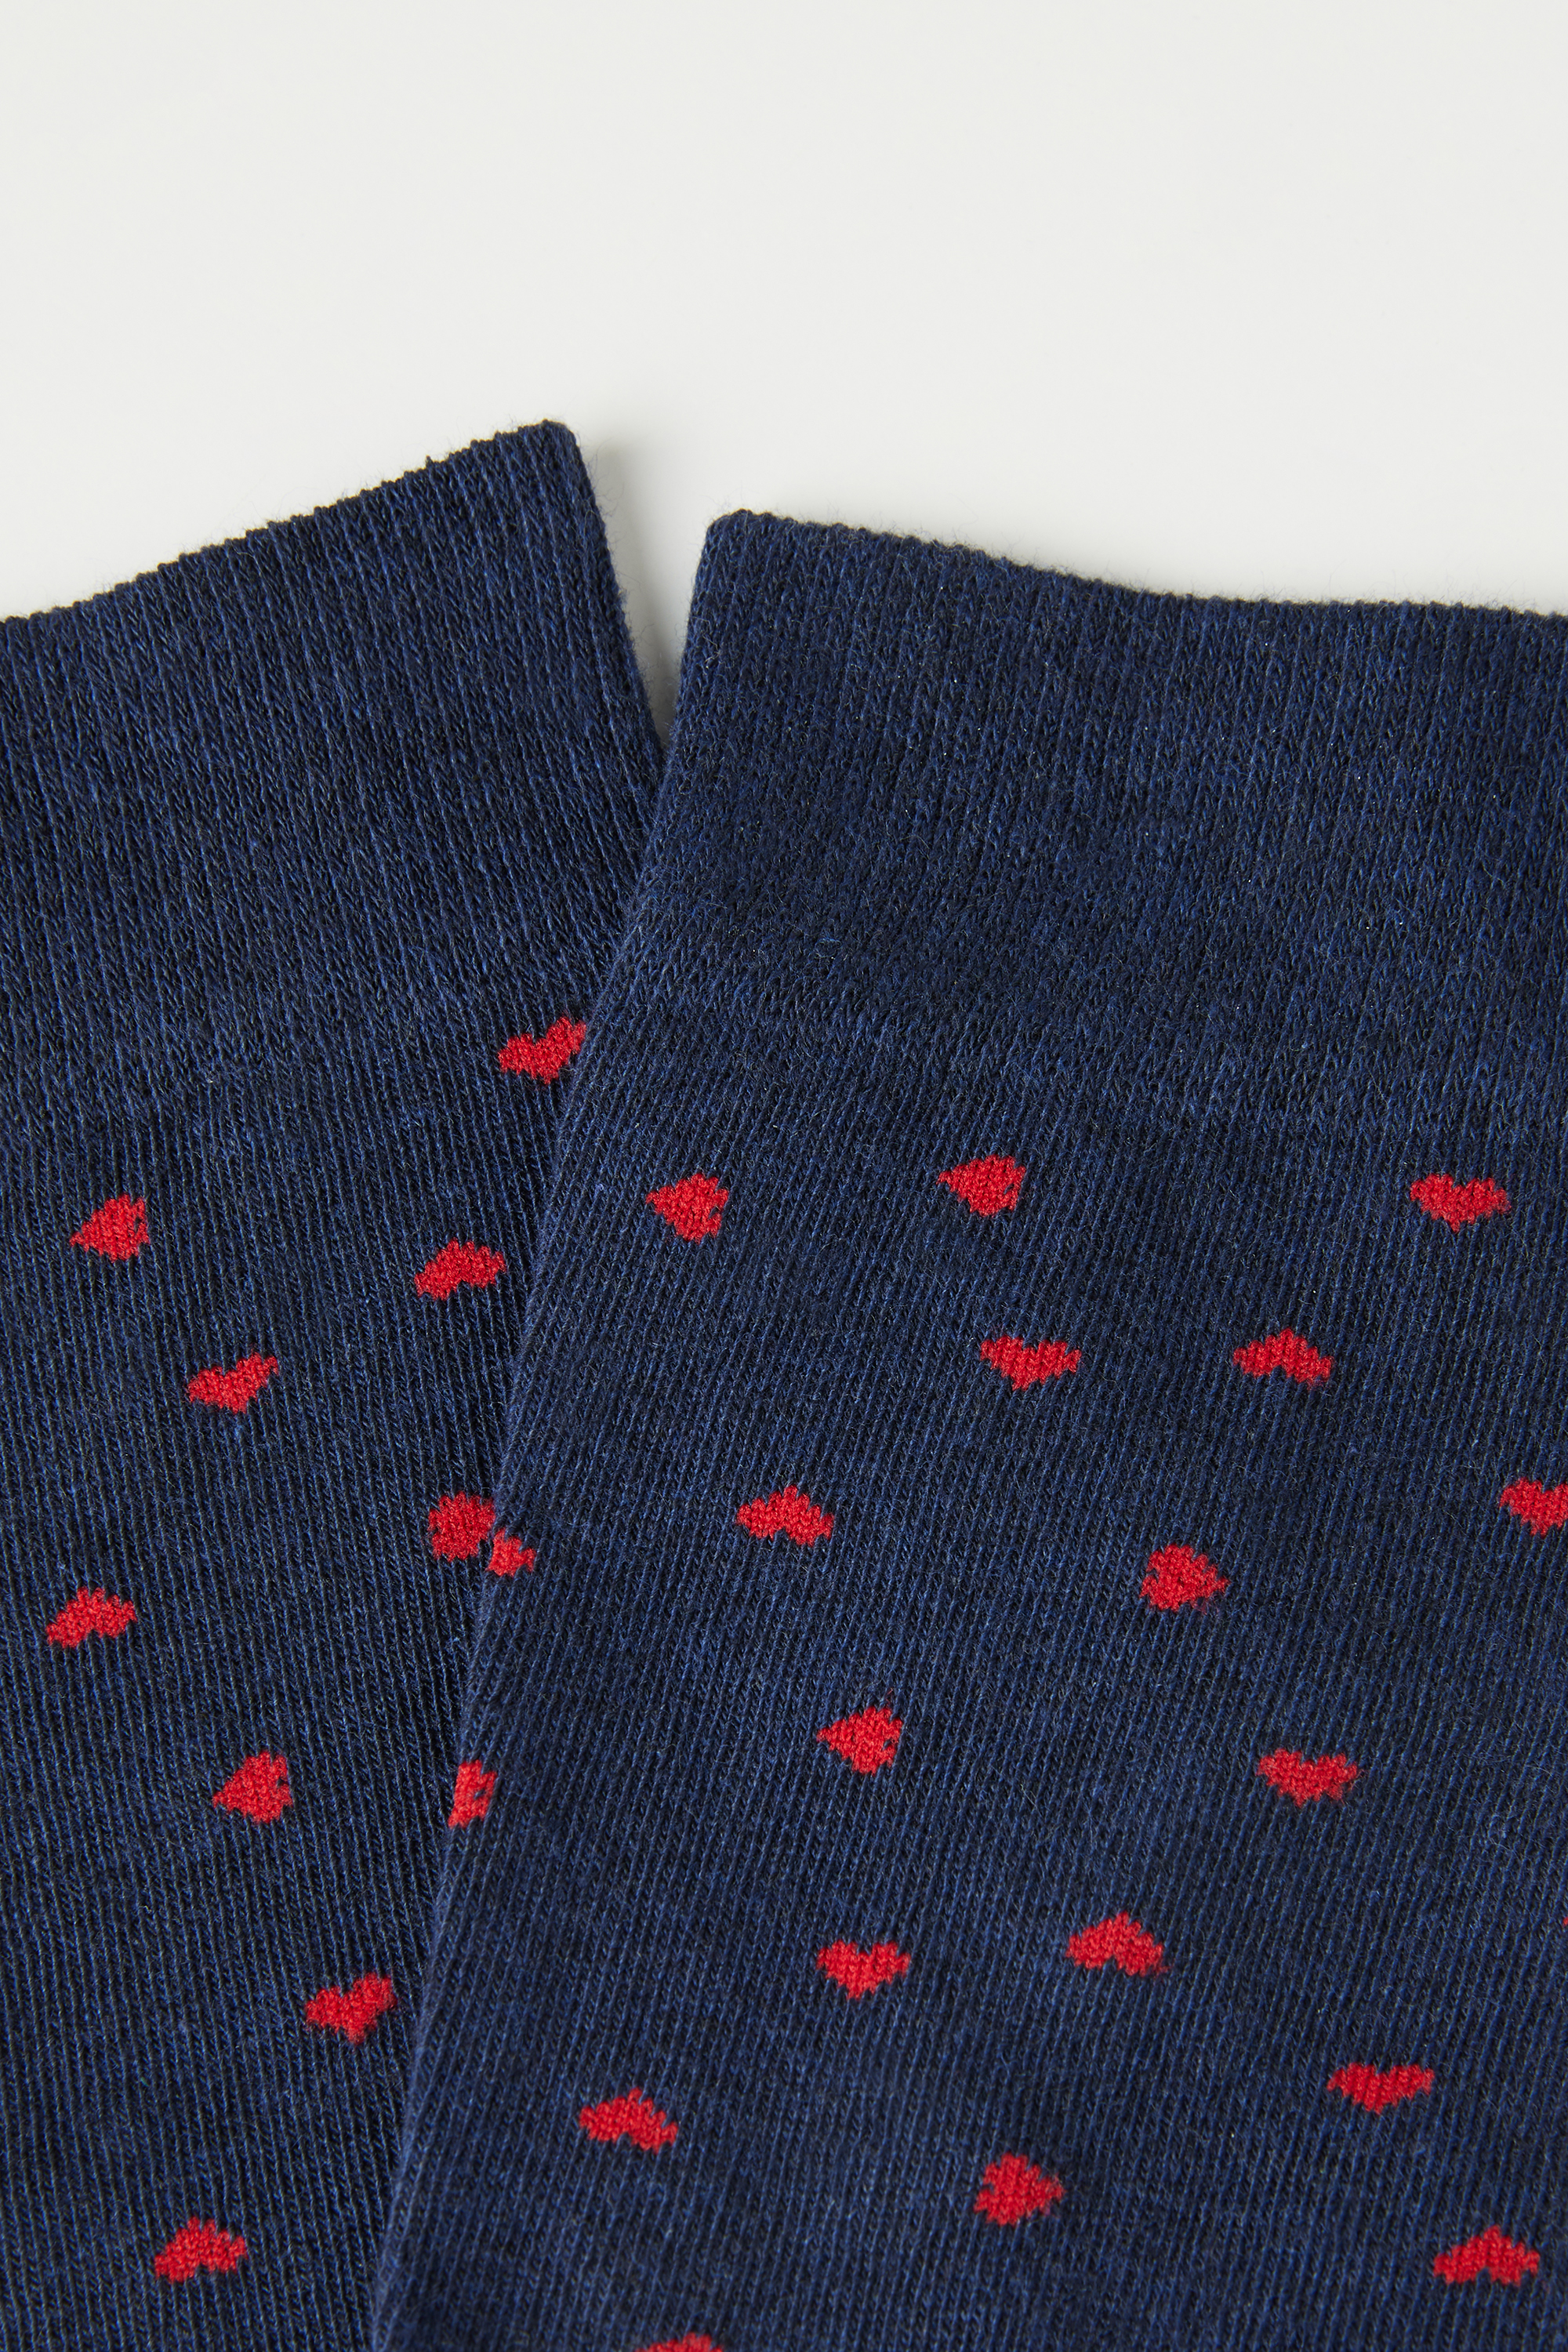 Men’s Semi-Short Patterned Cotton Socks